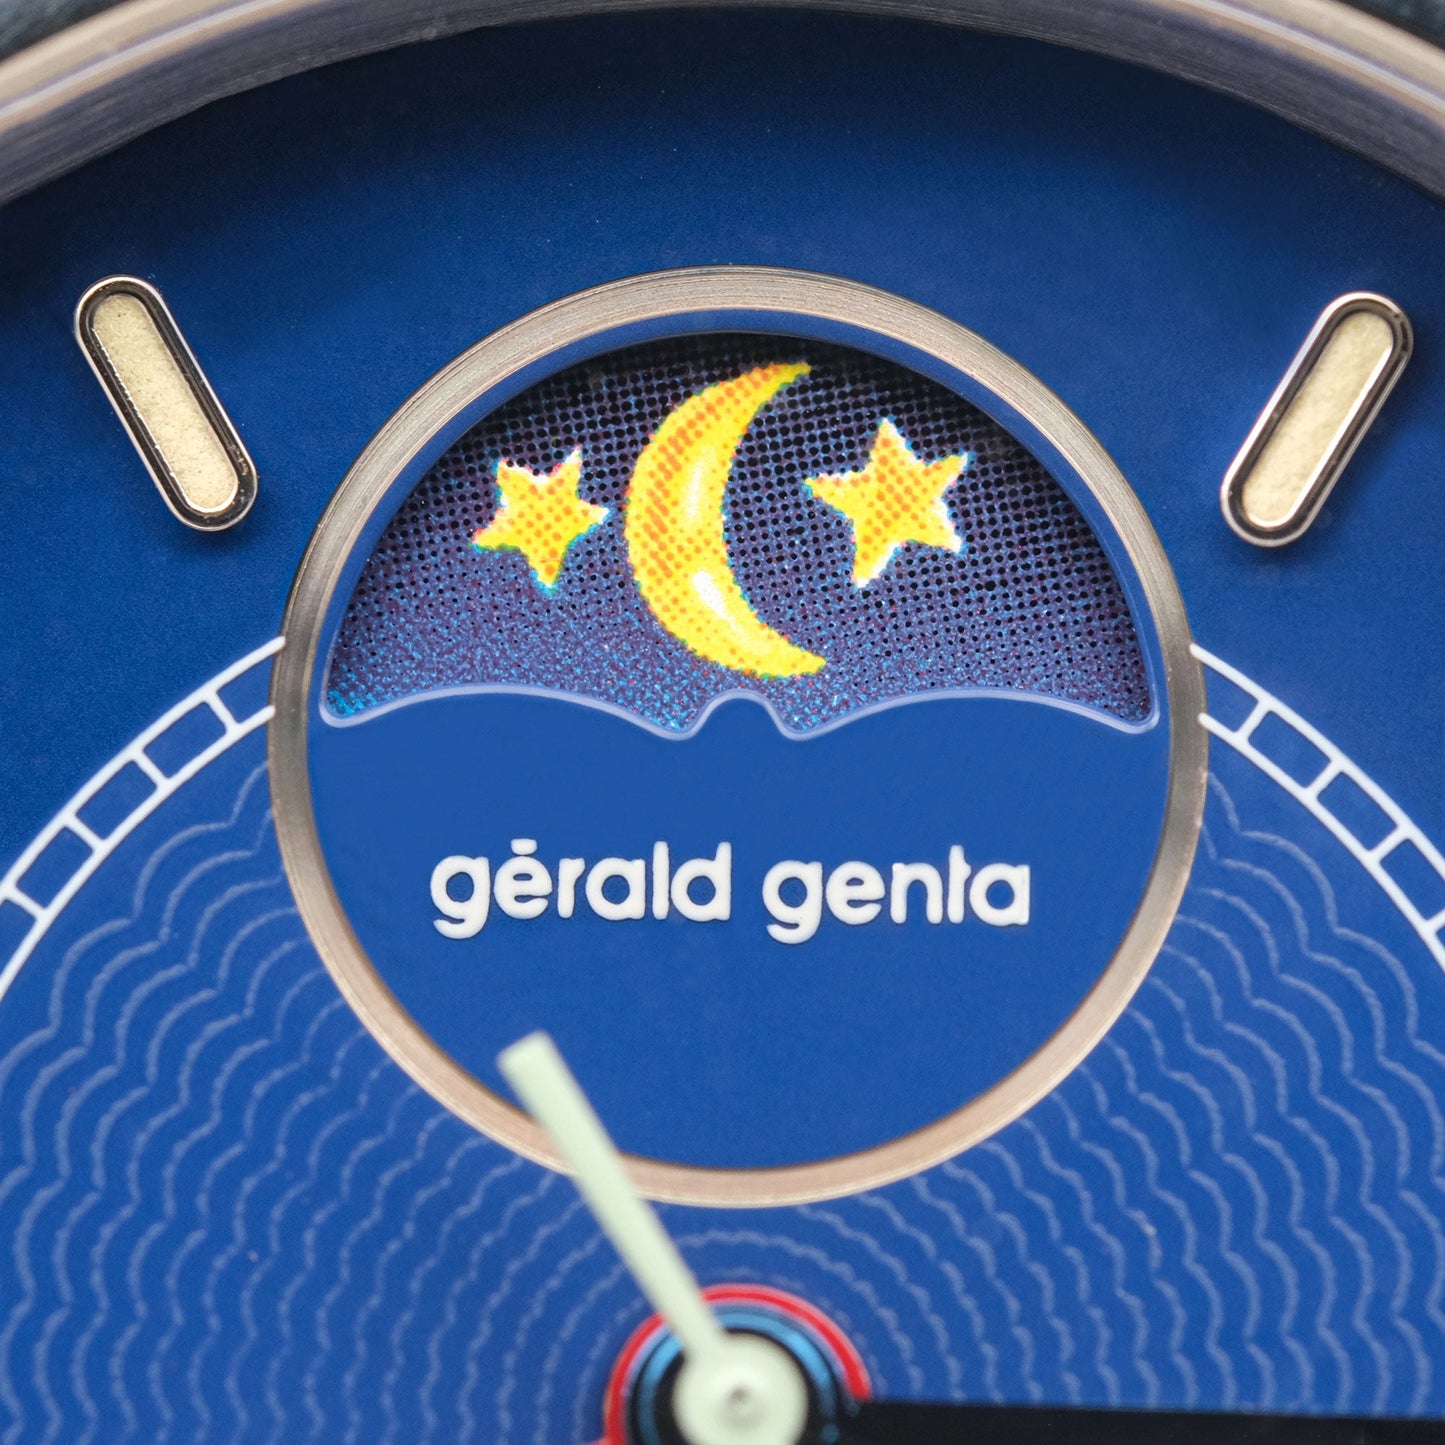 Gerald Genta Night Day GMT Ref.3707 de 2003